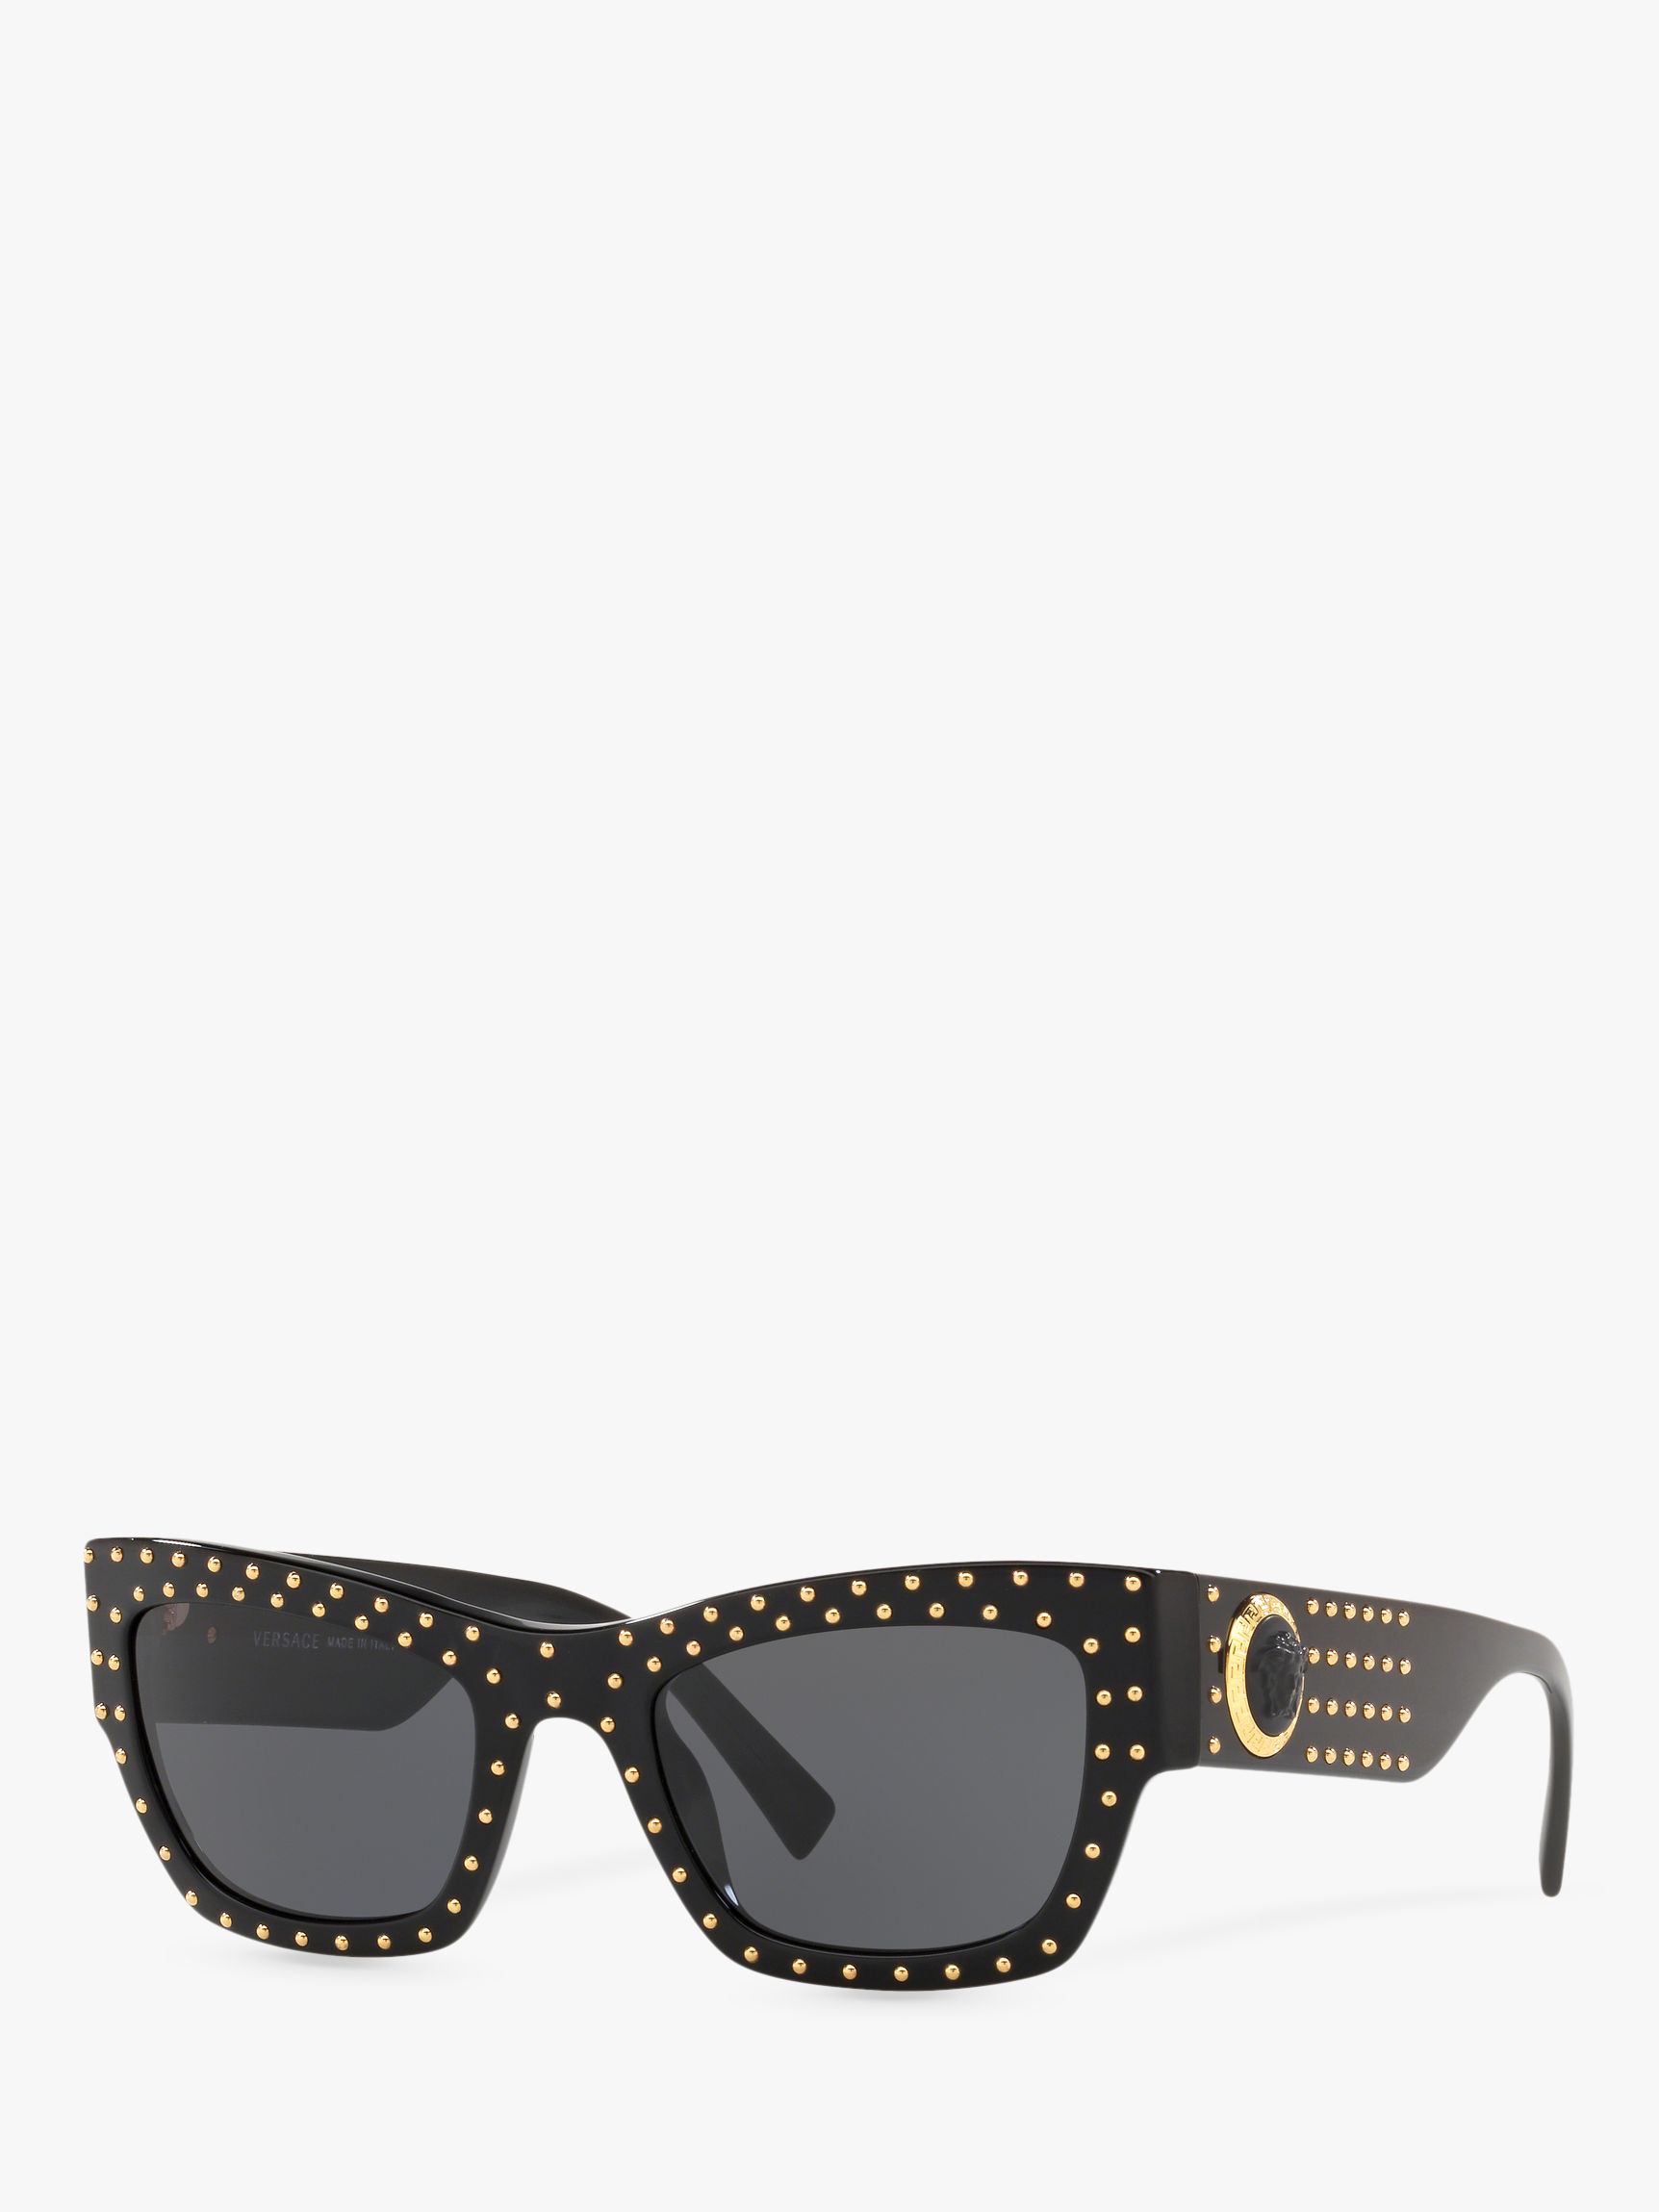 Versace VE4358 Women's Rectangular Sunglasses